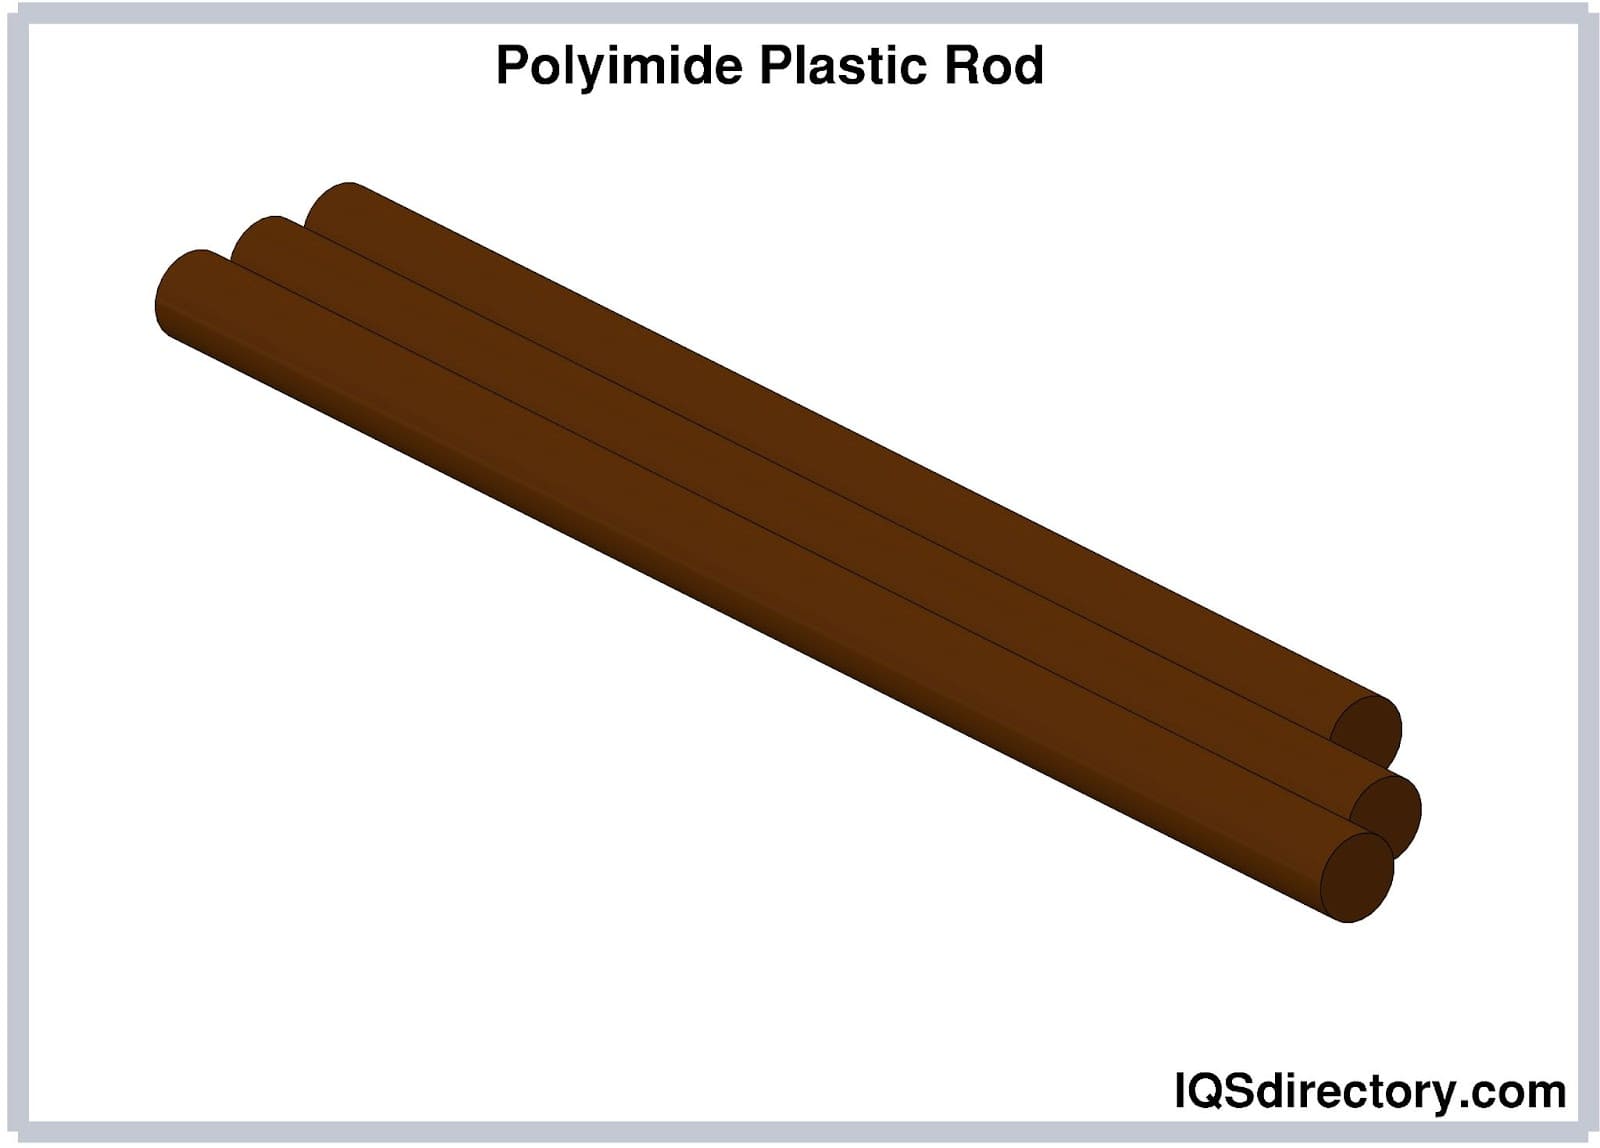 Polyimide Plastic Rod